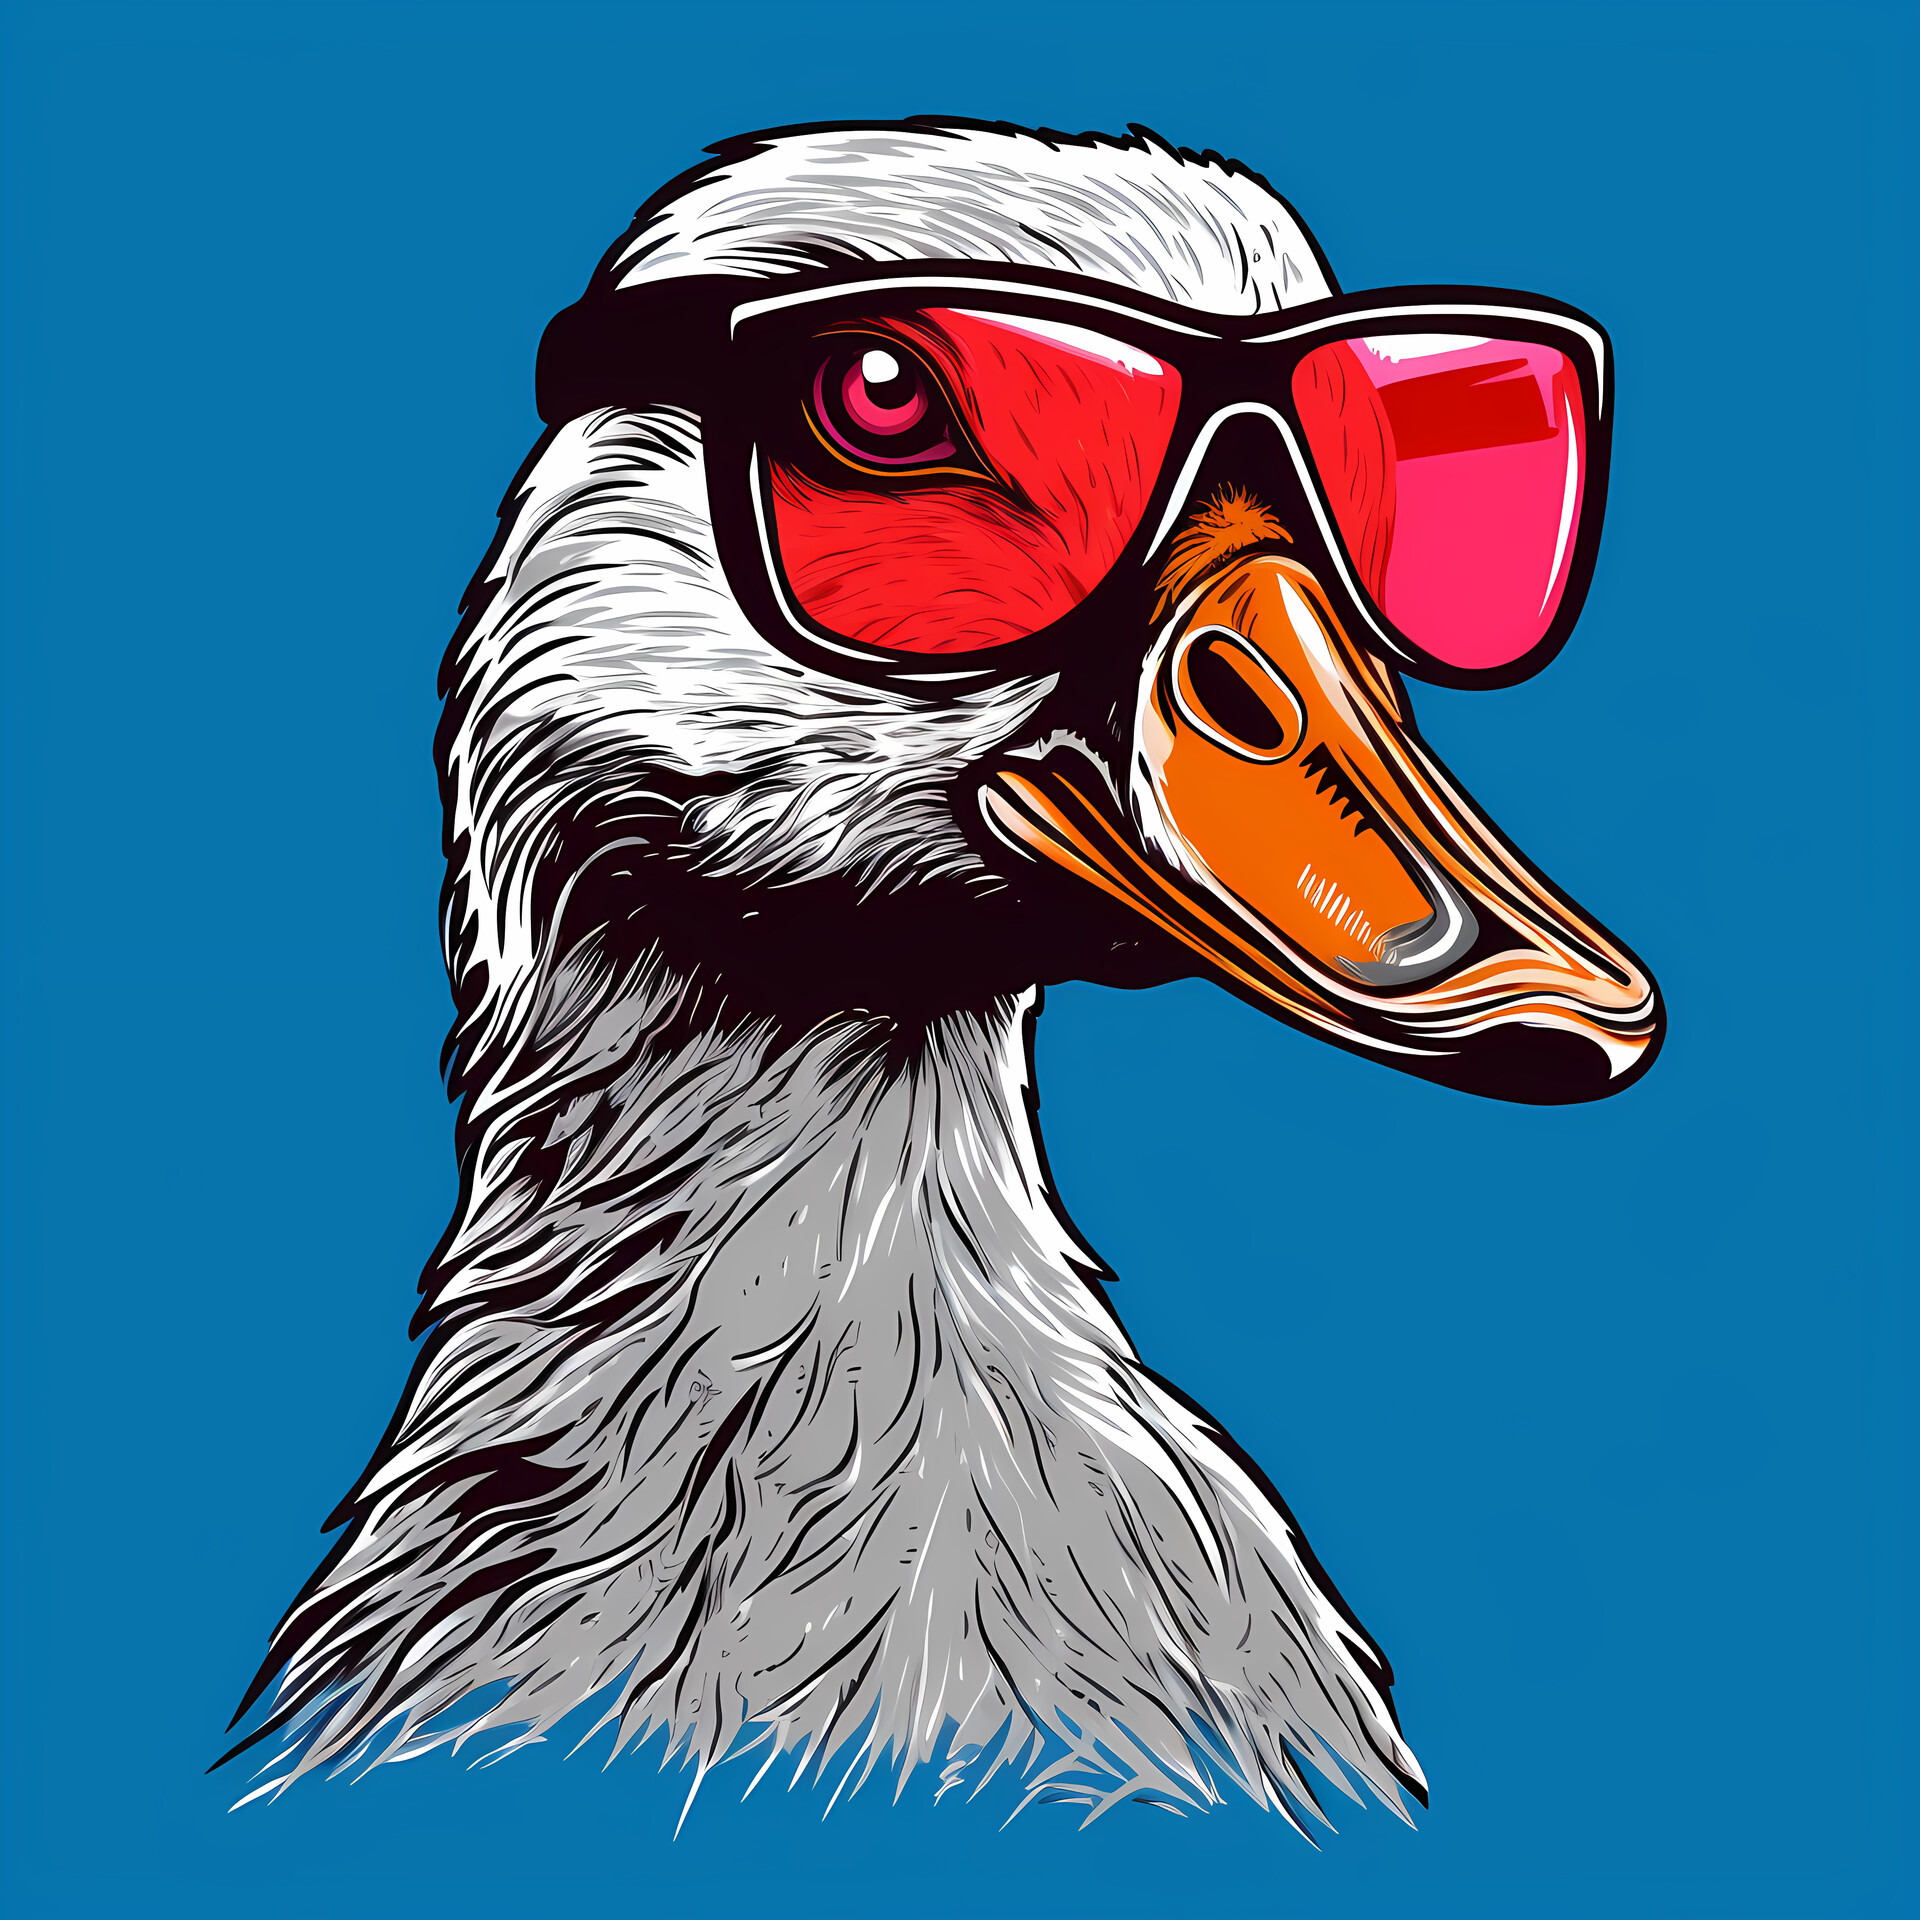 ArtStation - Sassy duck wearing red sunglasses